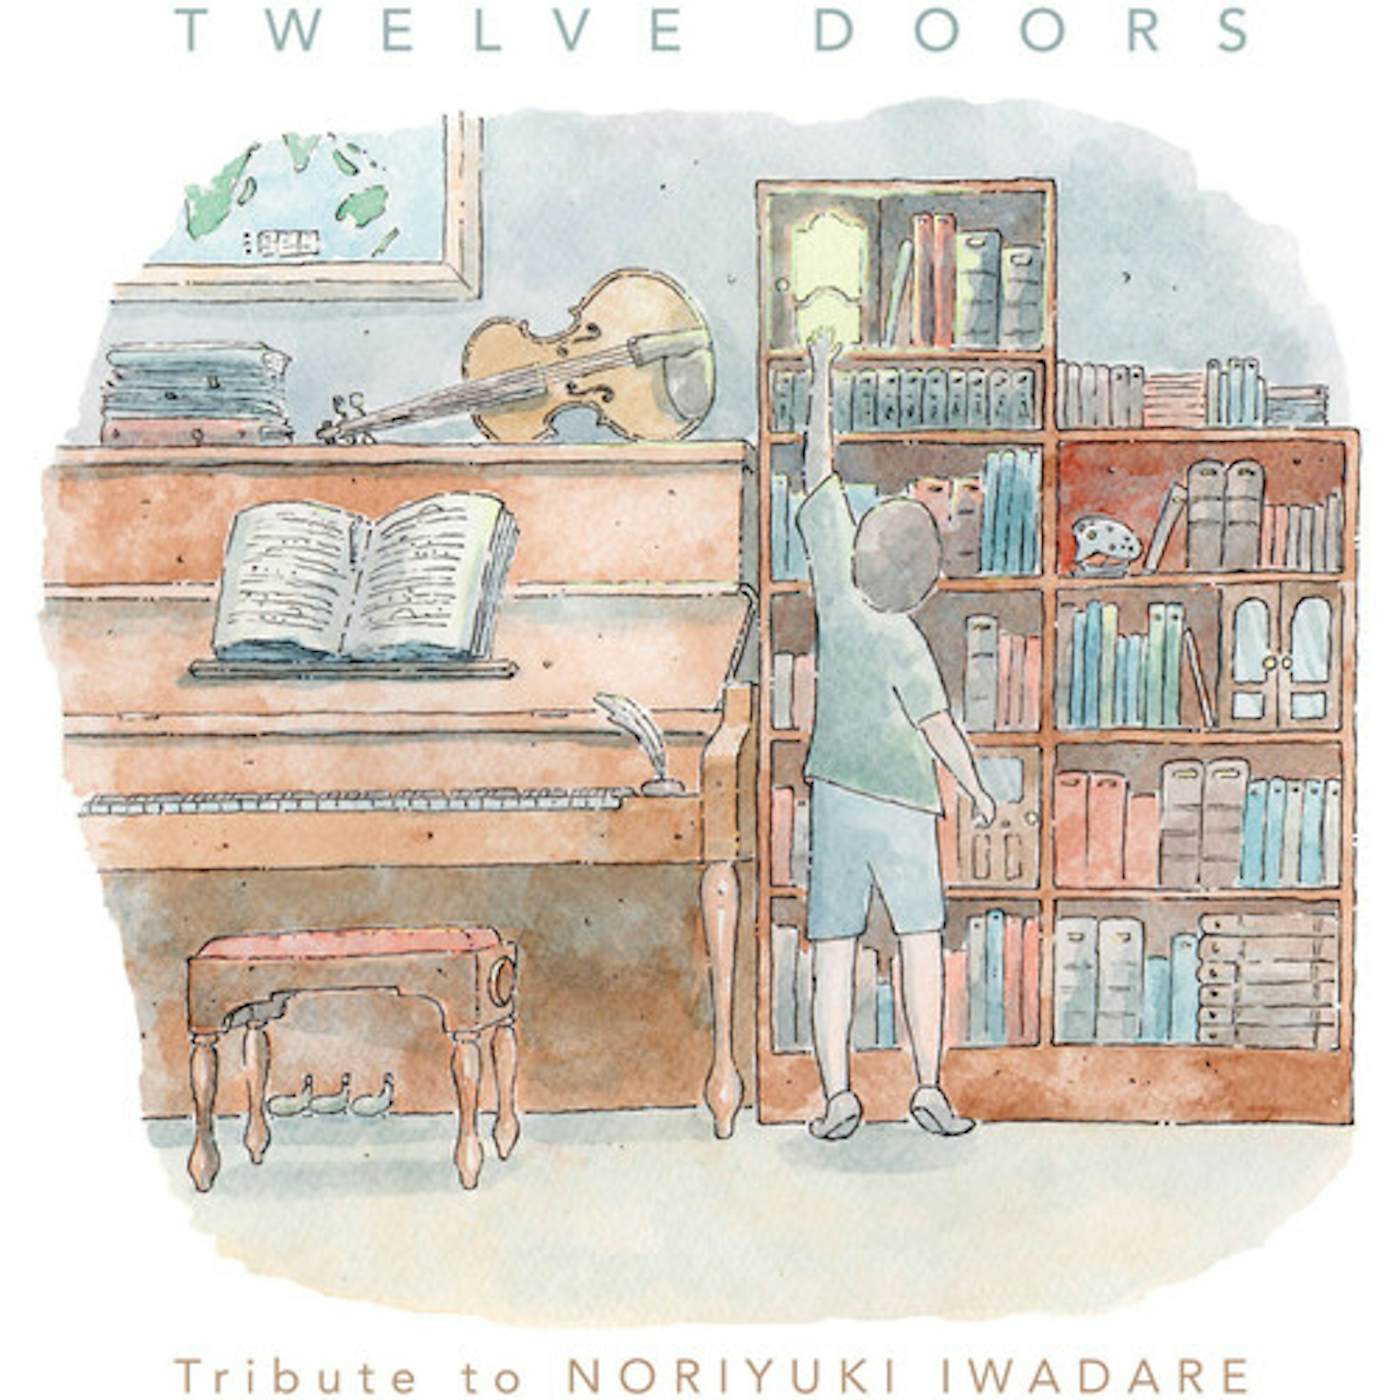 Noriyuki Iwadare TWELVE DOORS: TRIBUTE TO NURIYUKI IWADARE ARRANGE Vinyl Record